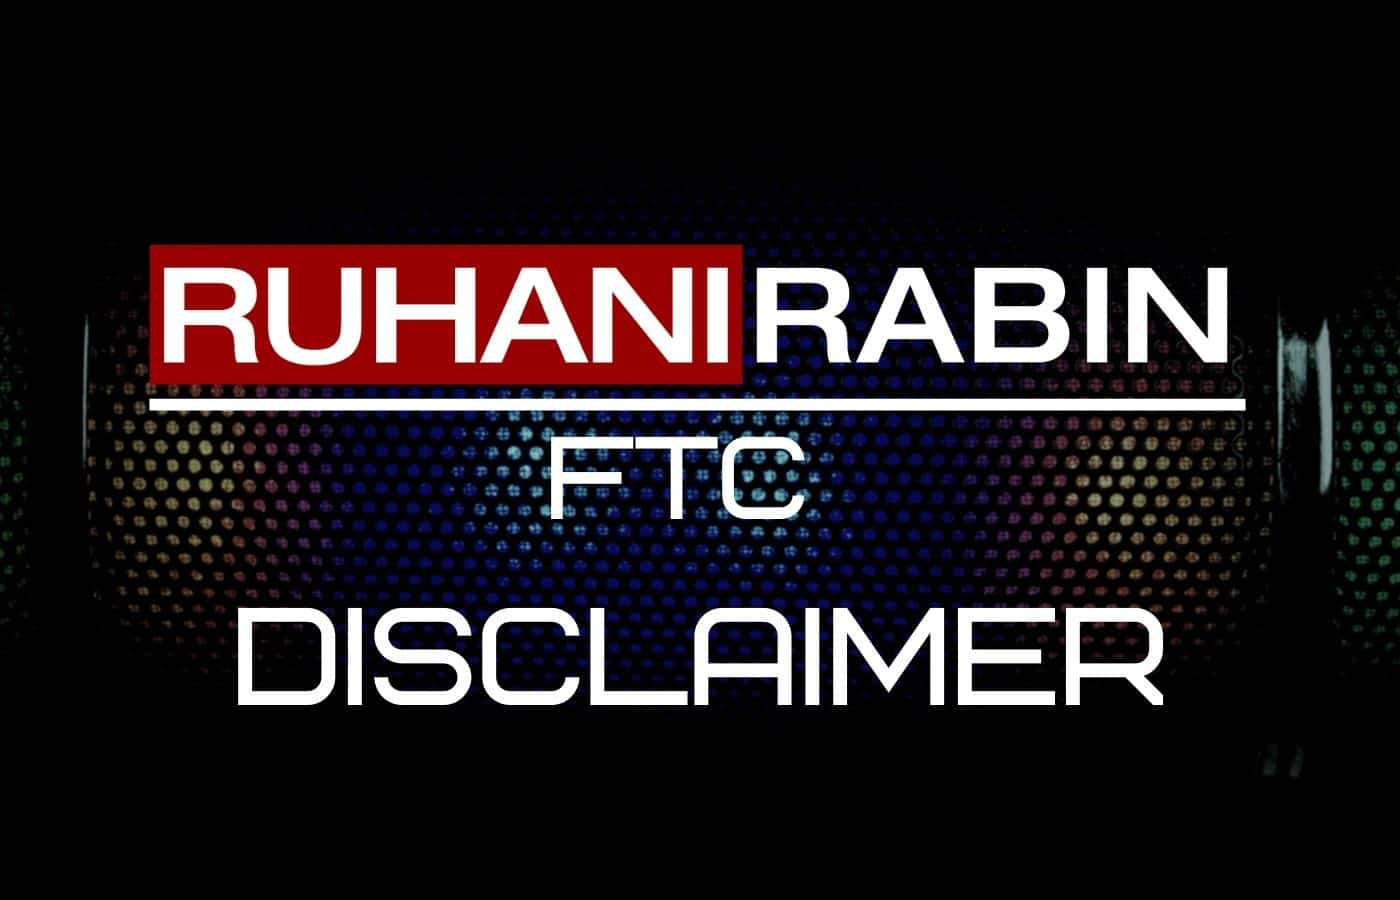 ruhanirabin com disclaimer